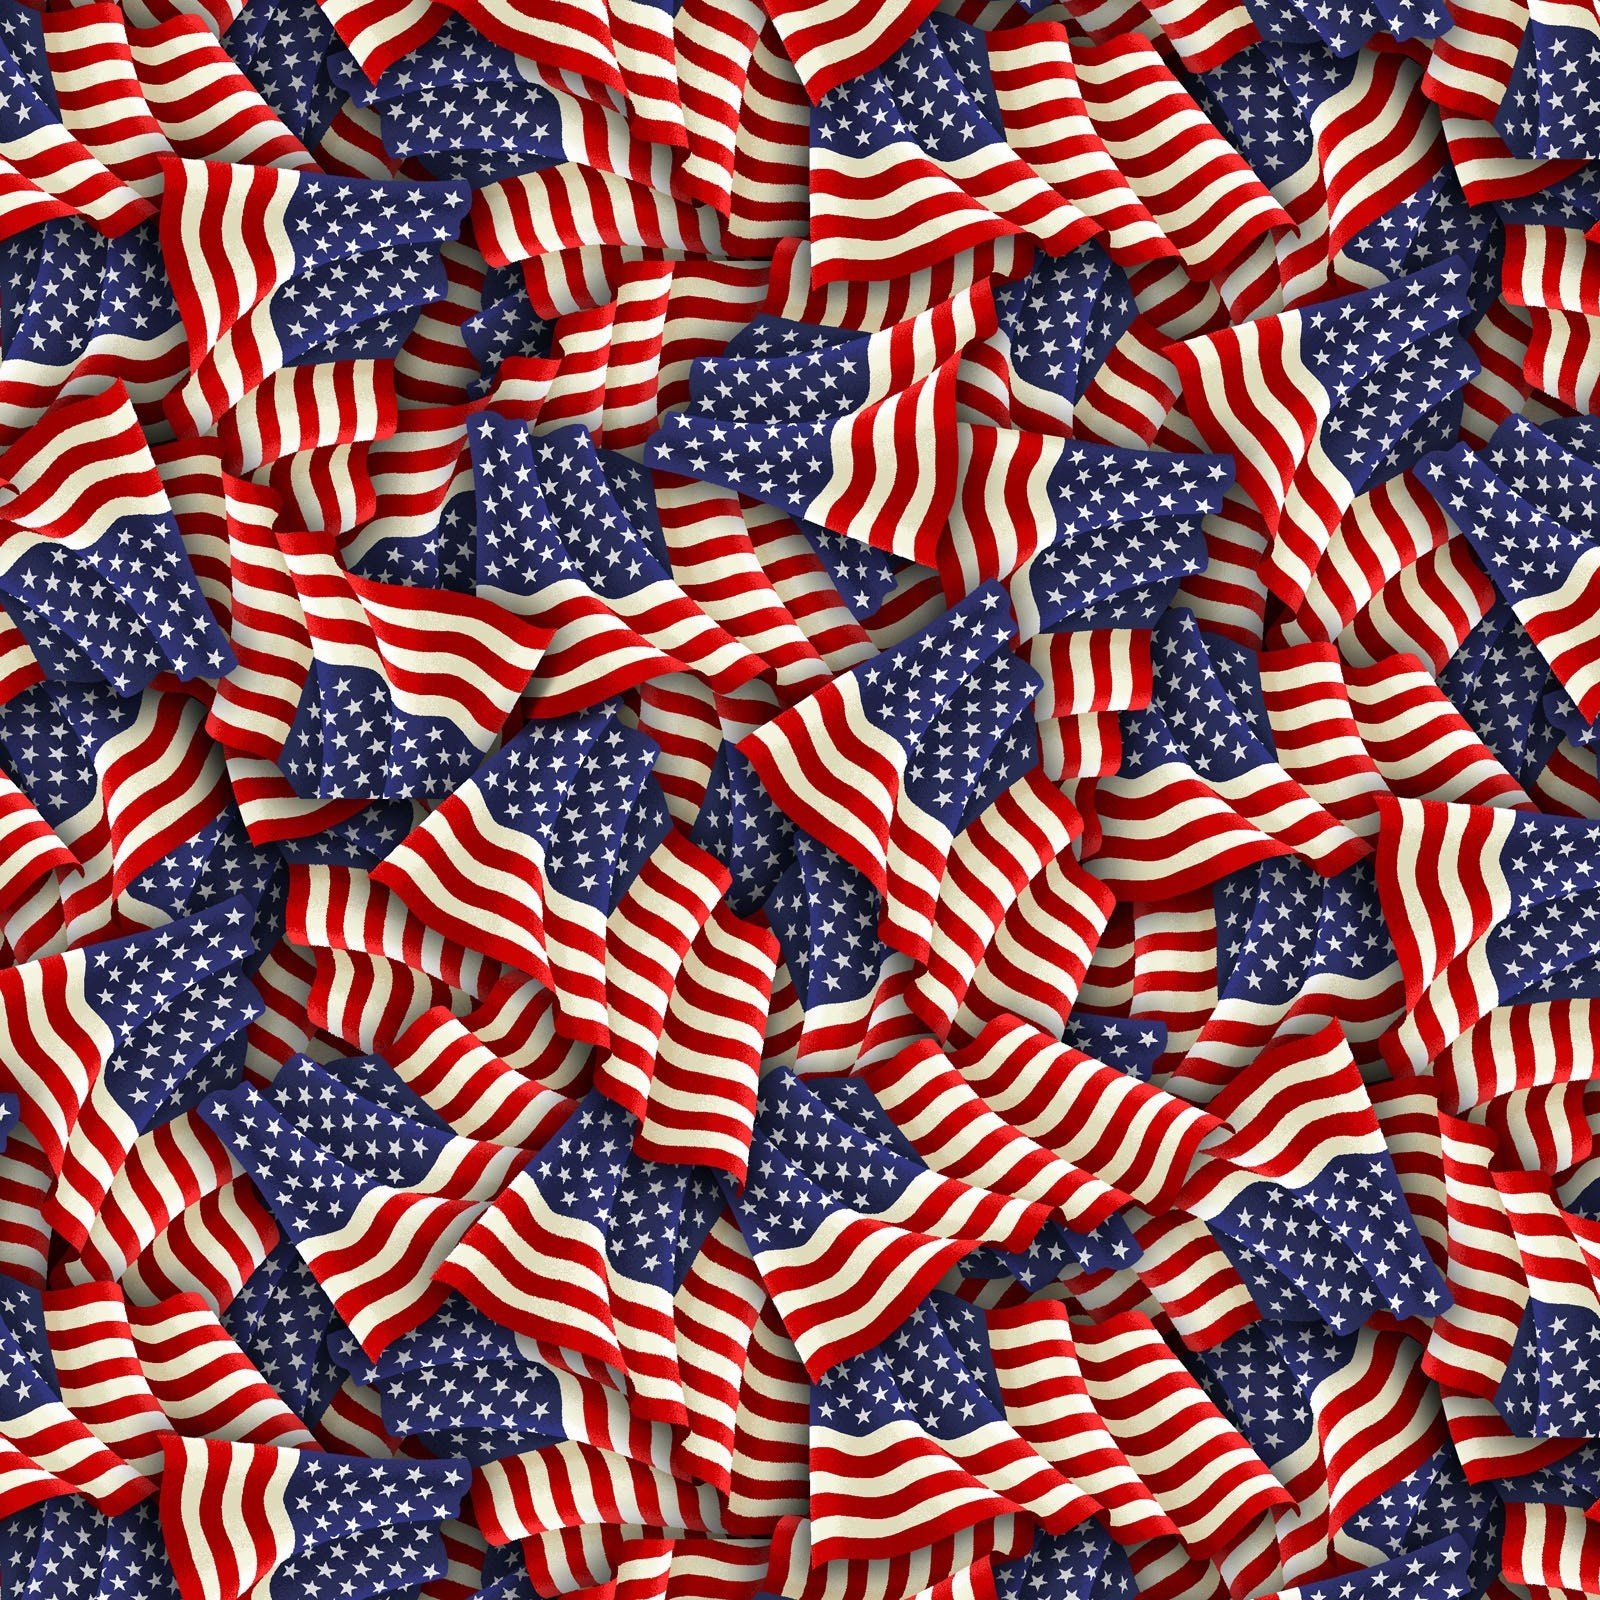 Large Wavy American Flag Patch - USA United States Badge 3.5 (Iron on)